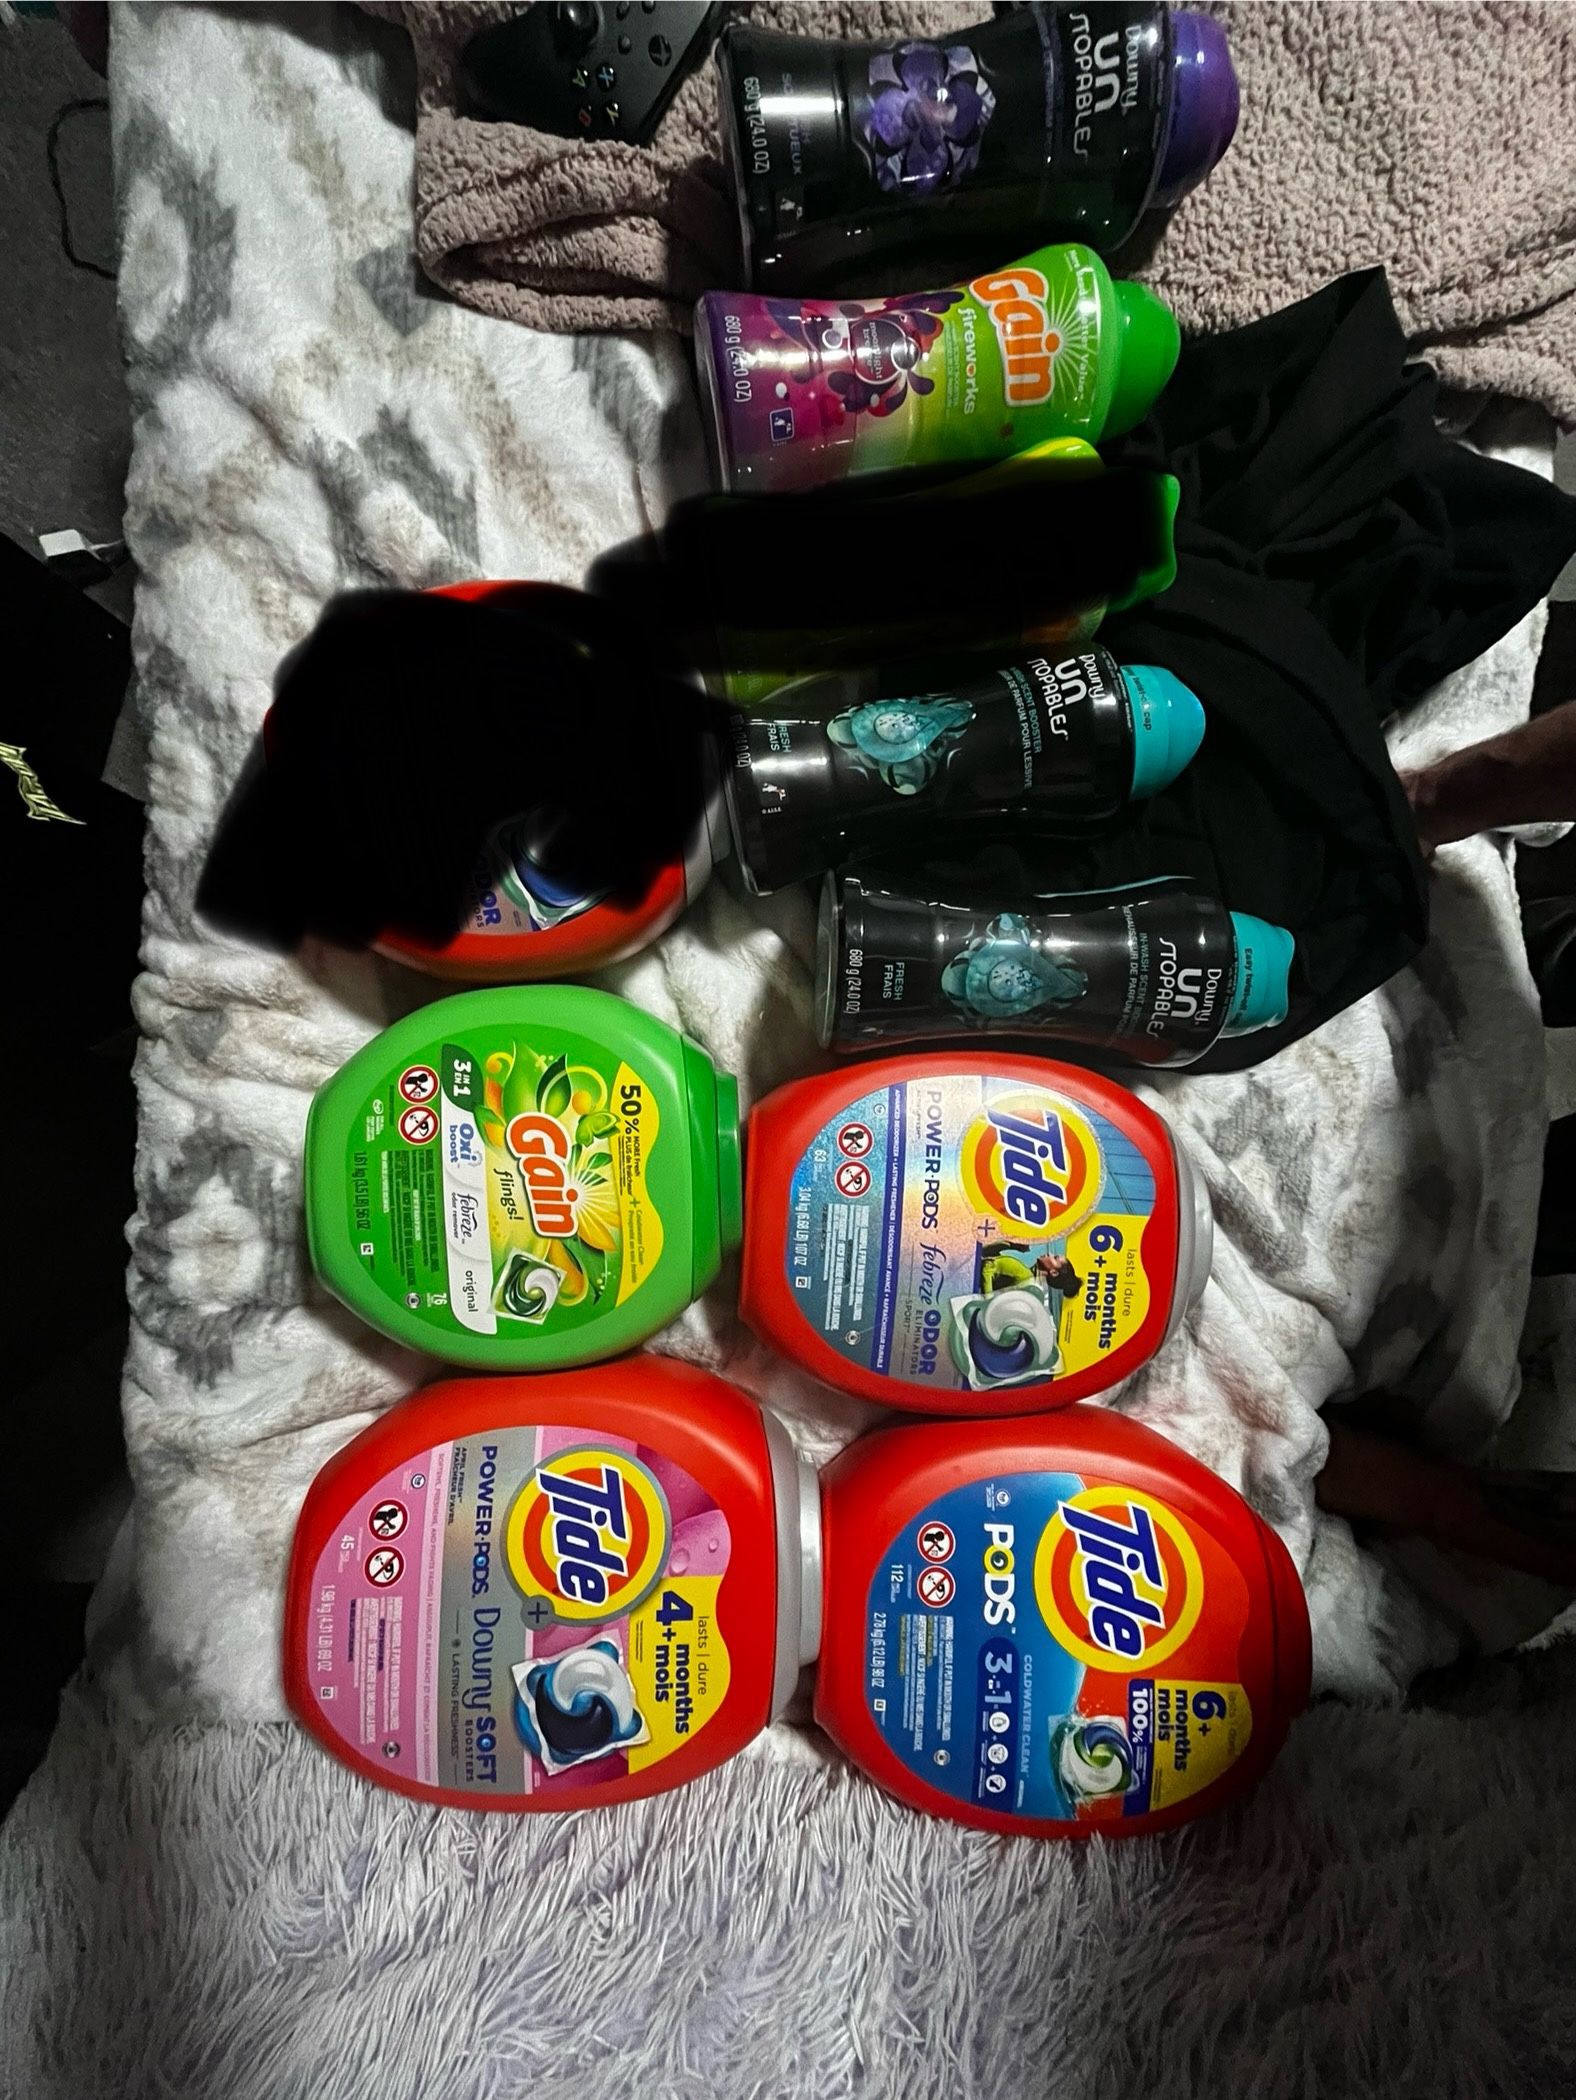 Detergent Products